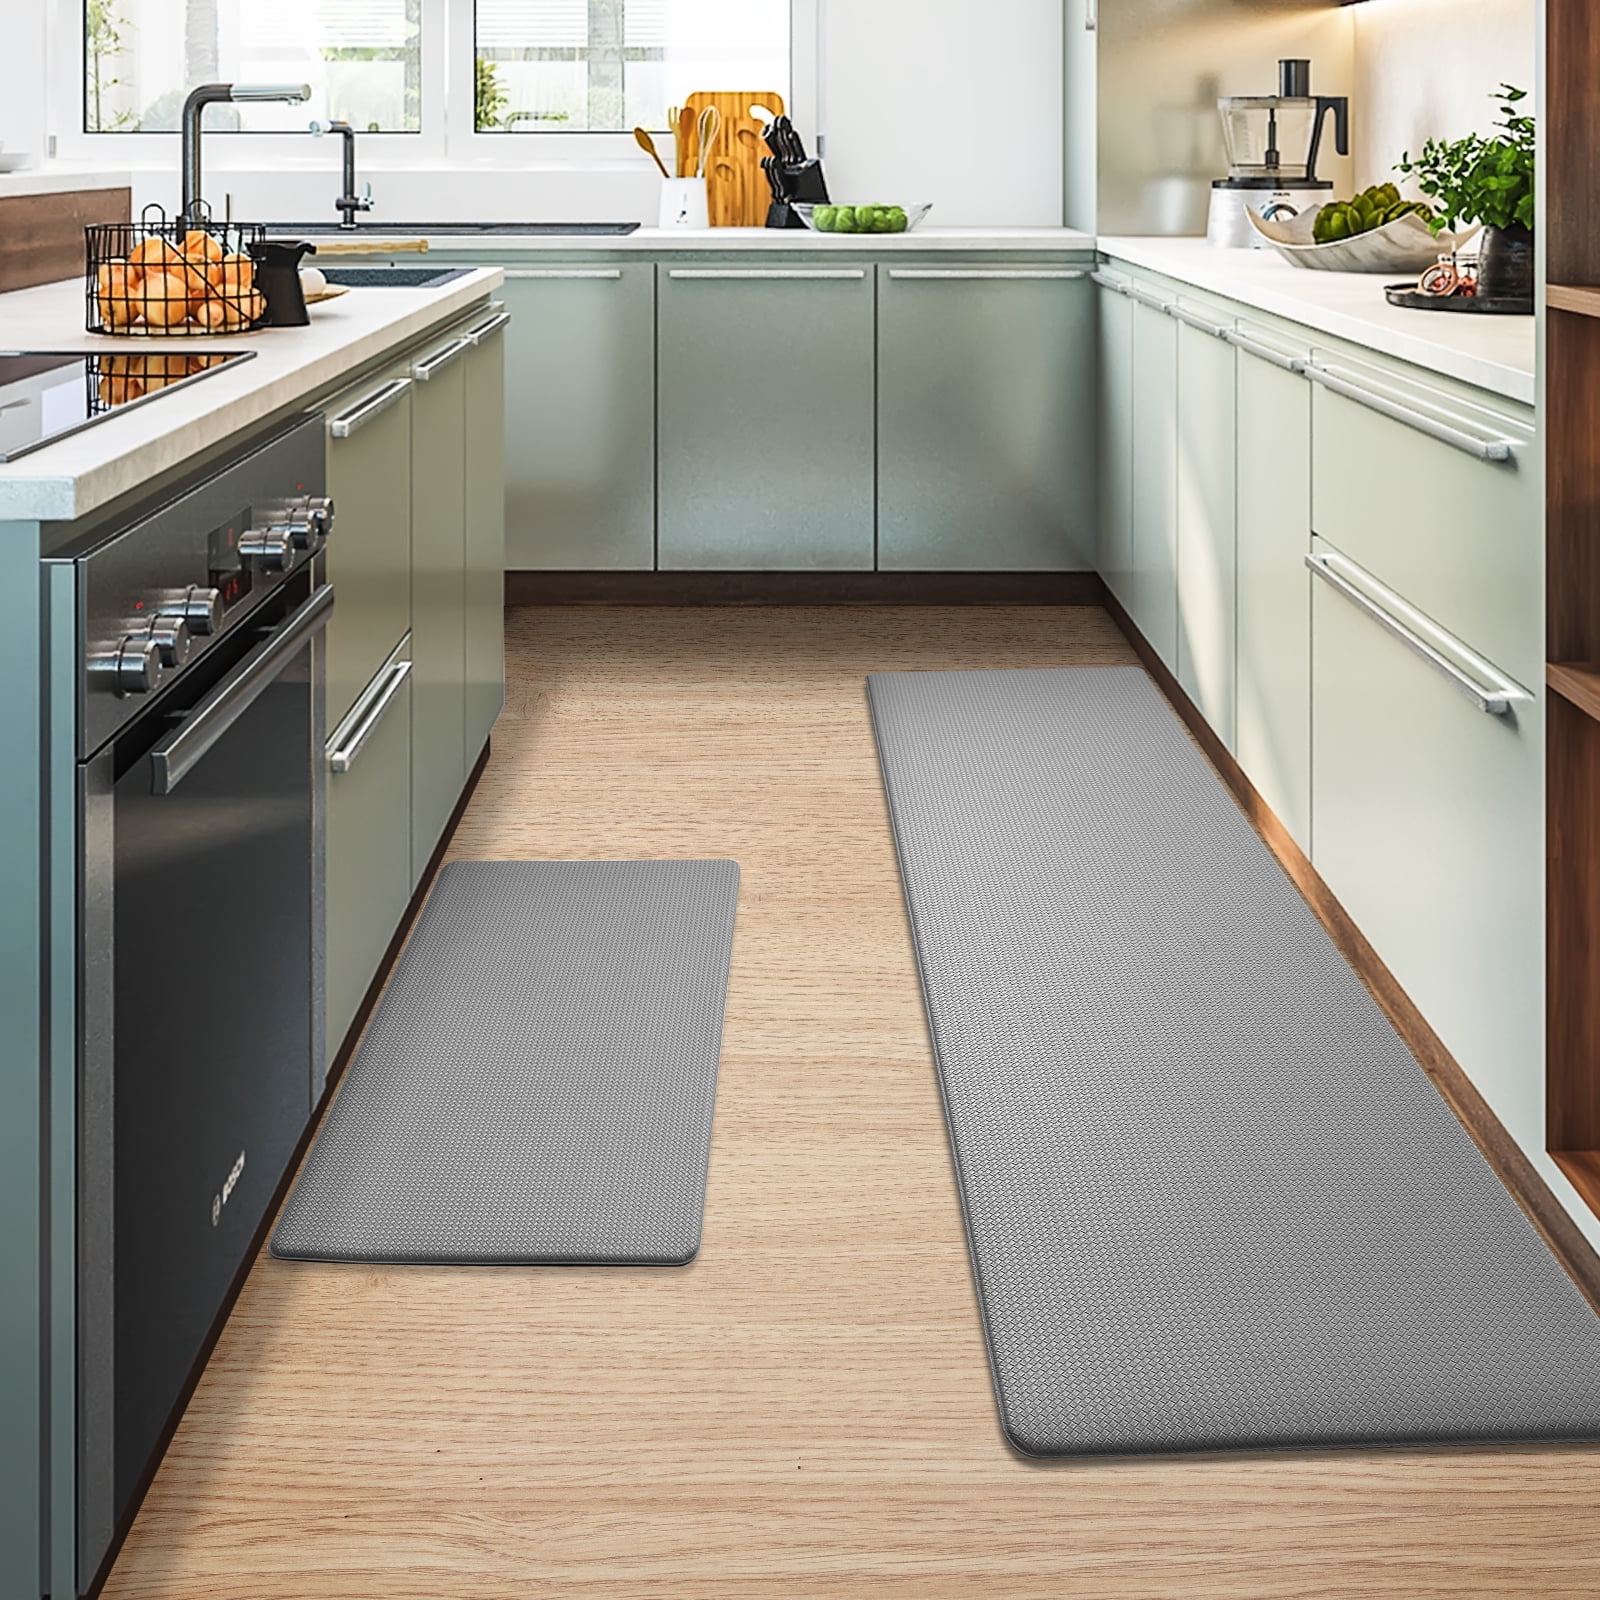 Galmaxs7 Kitchen Mats, Kitchen mats for Floor, Non Skid Washable